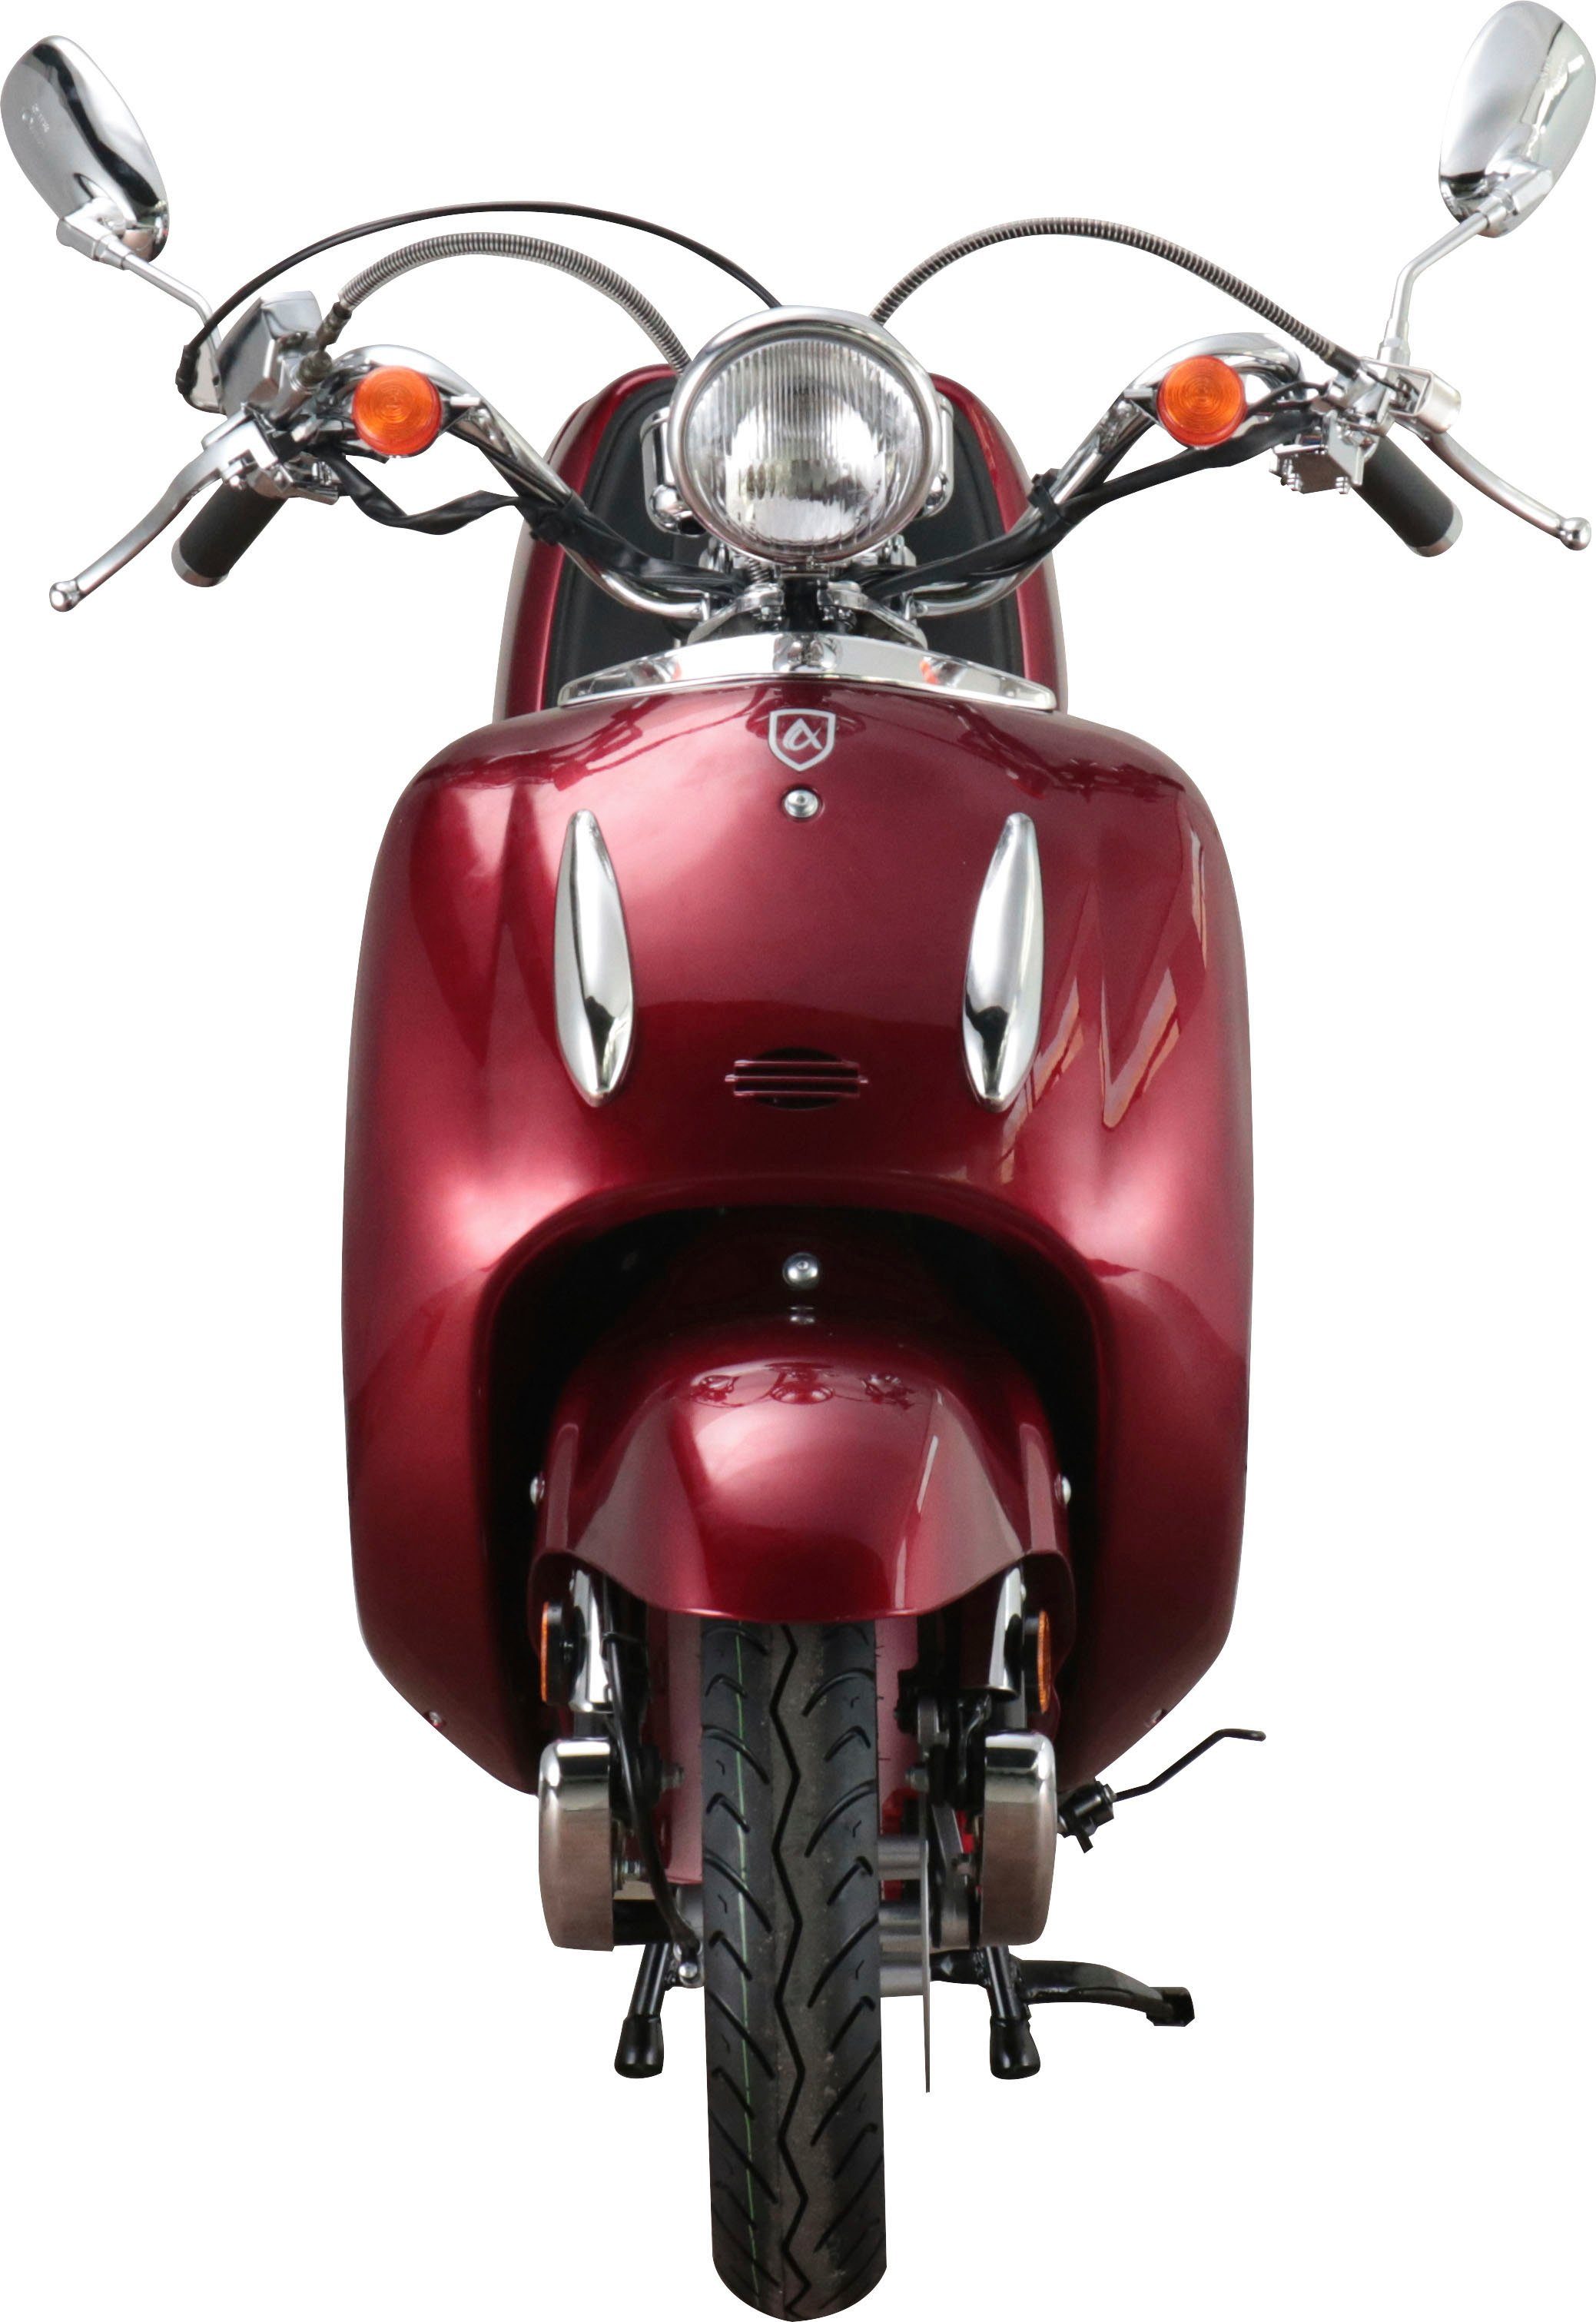 5, Firenze, Euro 85 inkl. Motorroller km/h, weinrot Topcase ccm, Motors Alpha 125 Retro